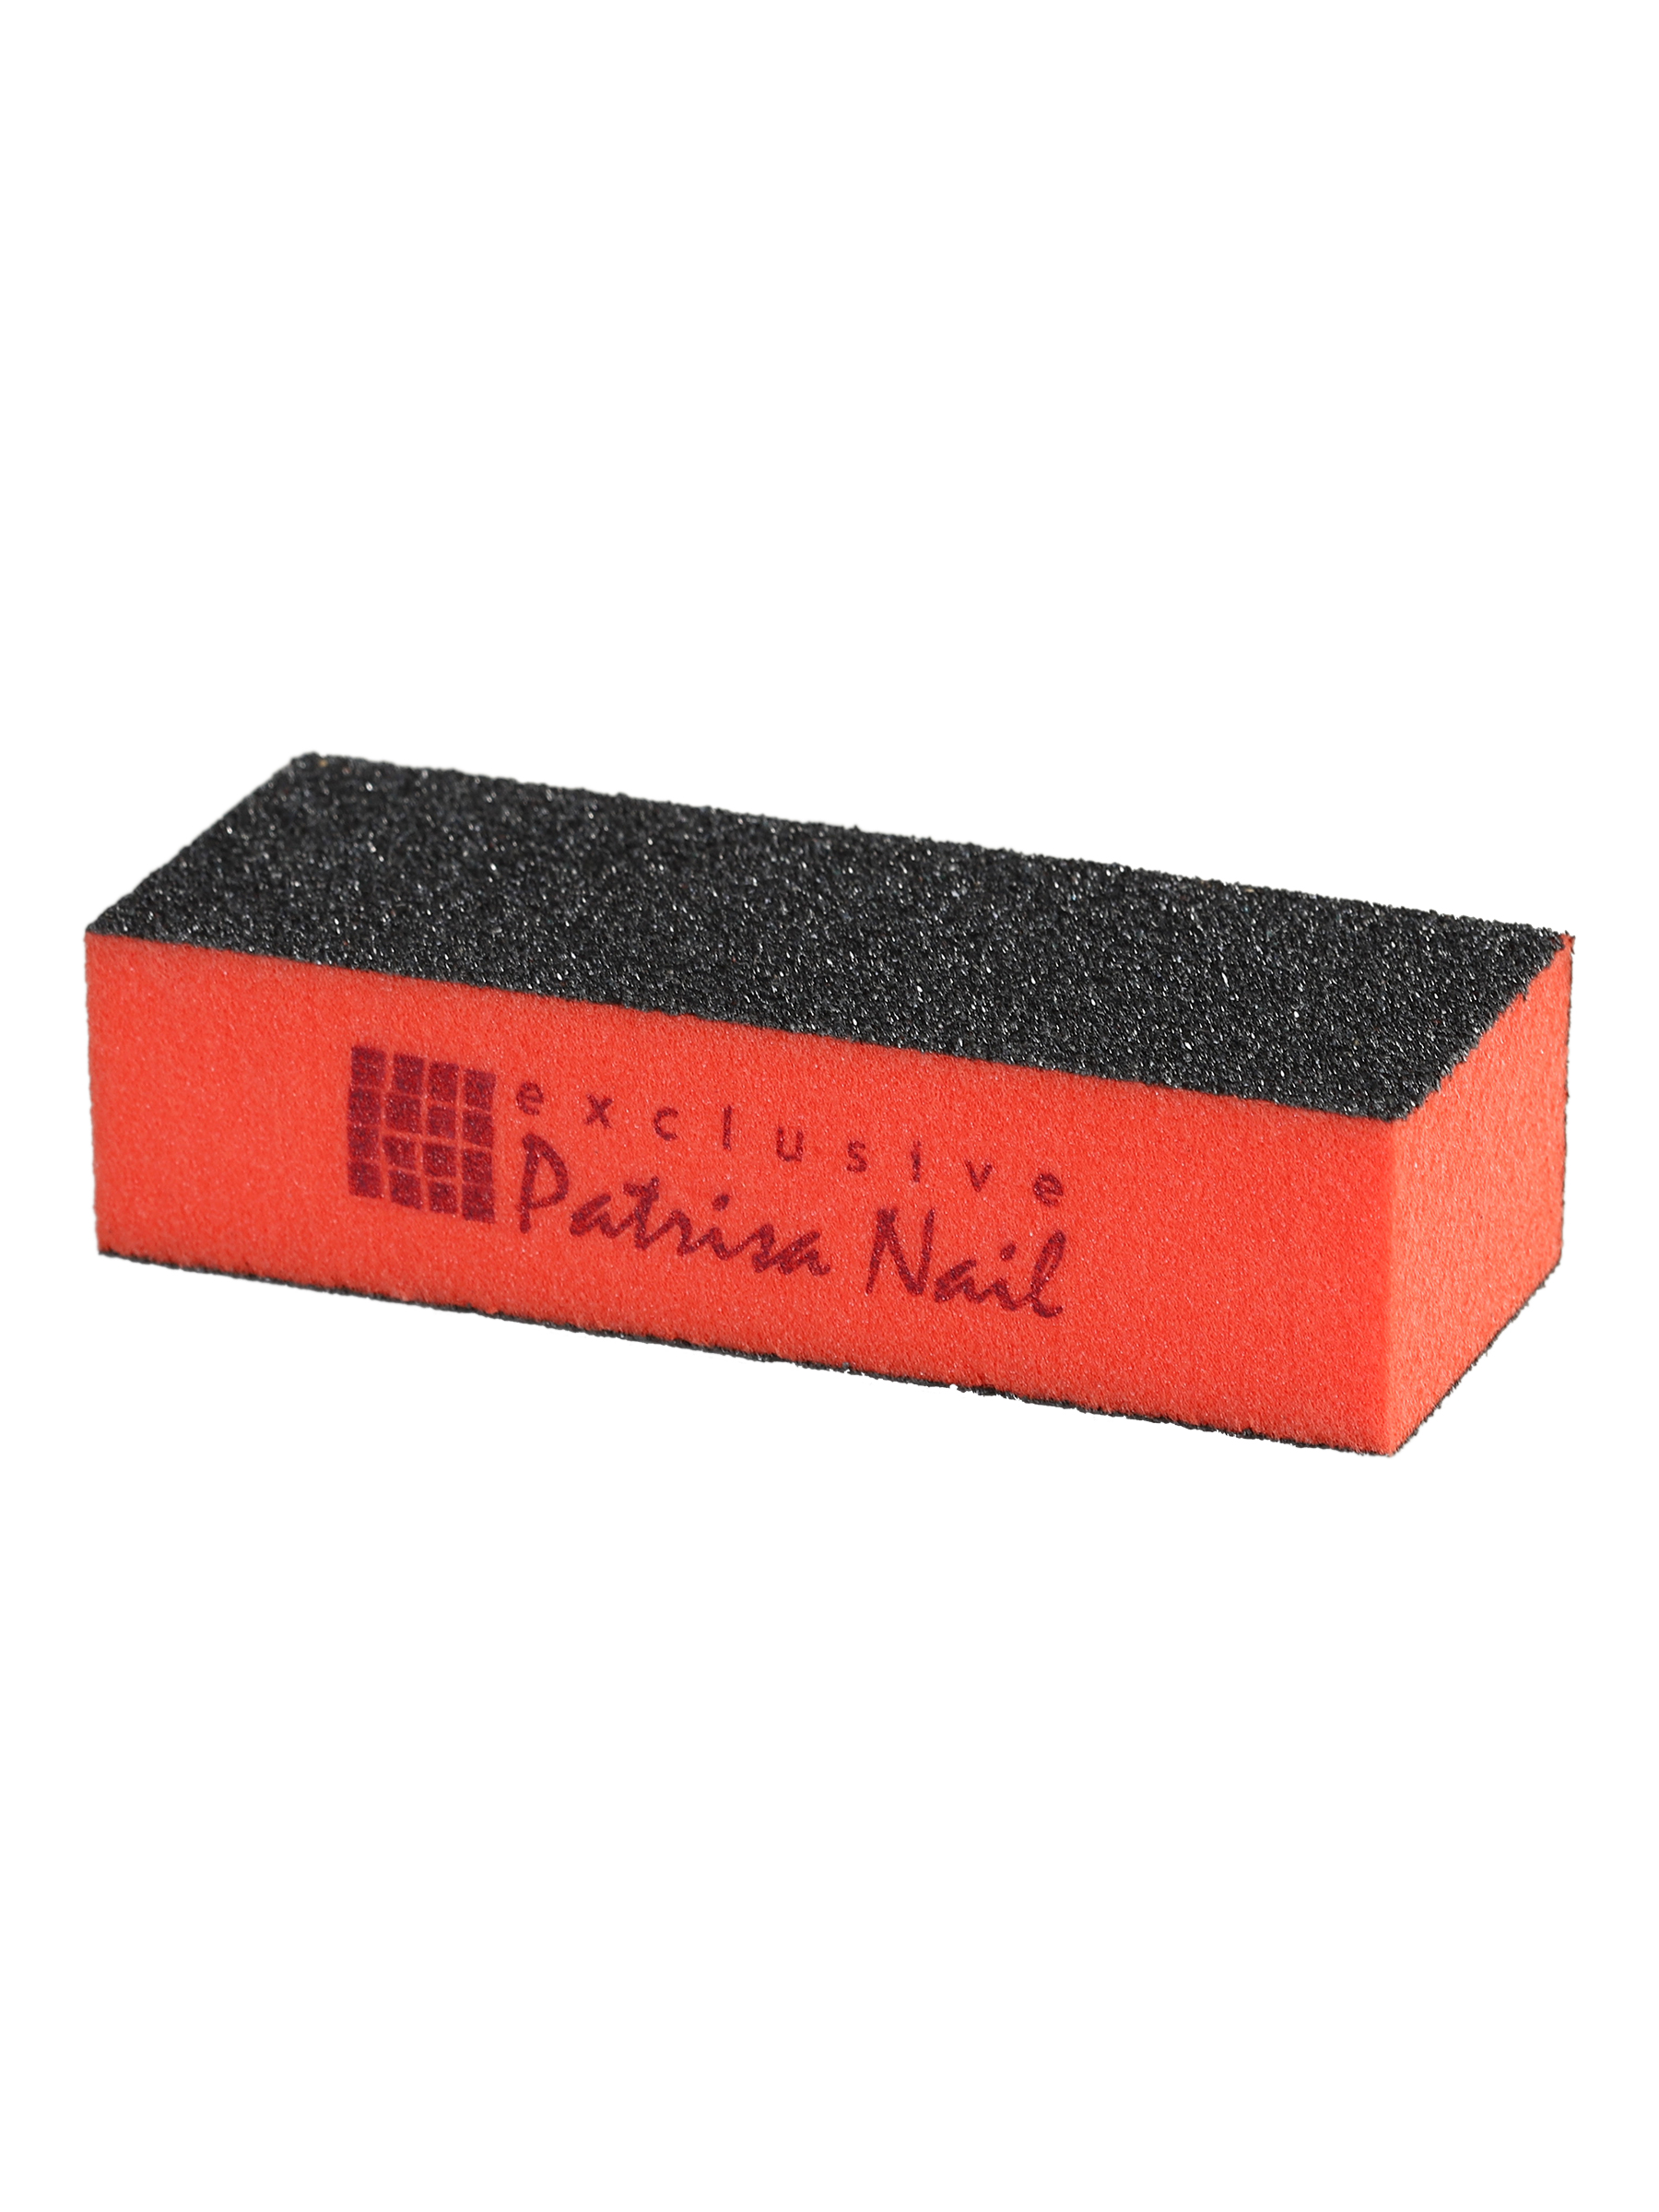 Баф для ногтей Patrisa Nail шлифовочный блок трехсторонний серо-оранжевый 100/180/240